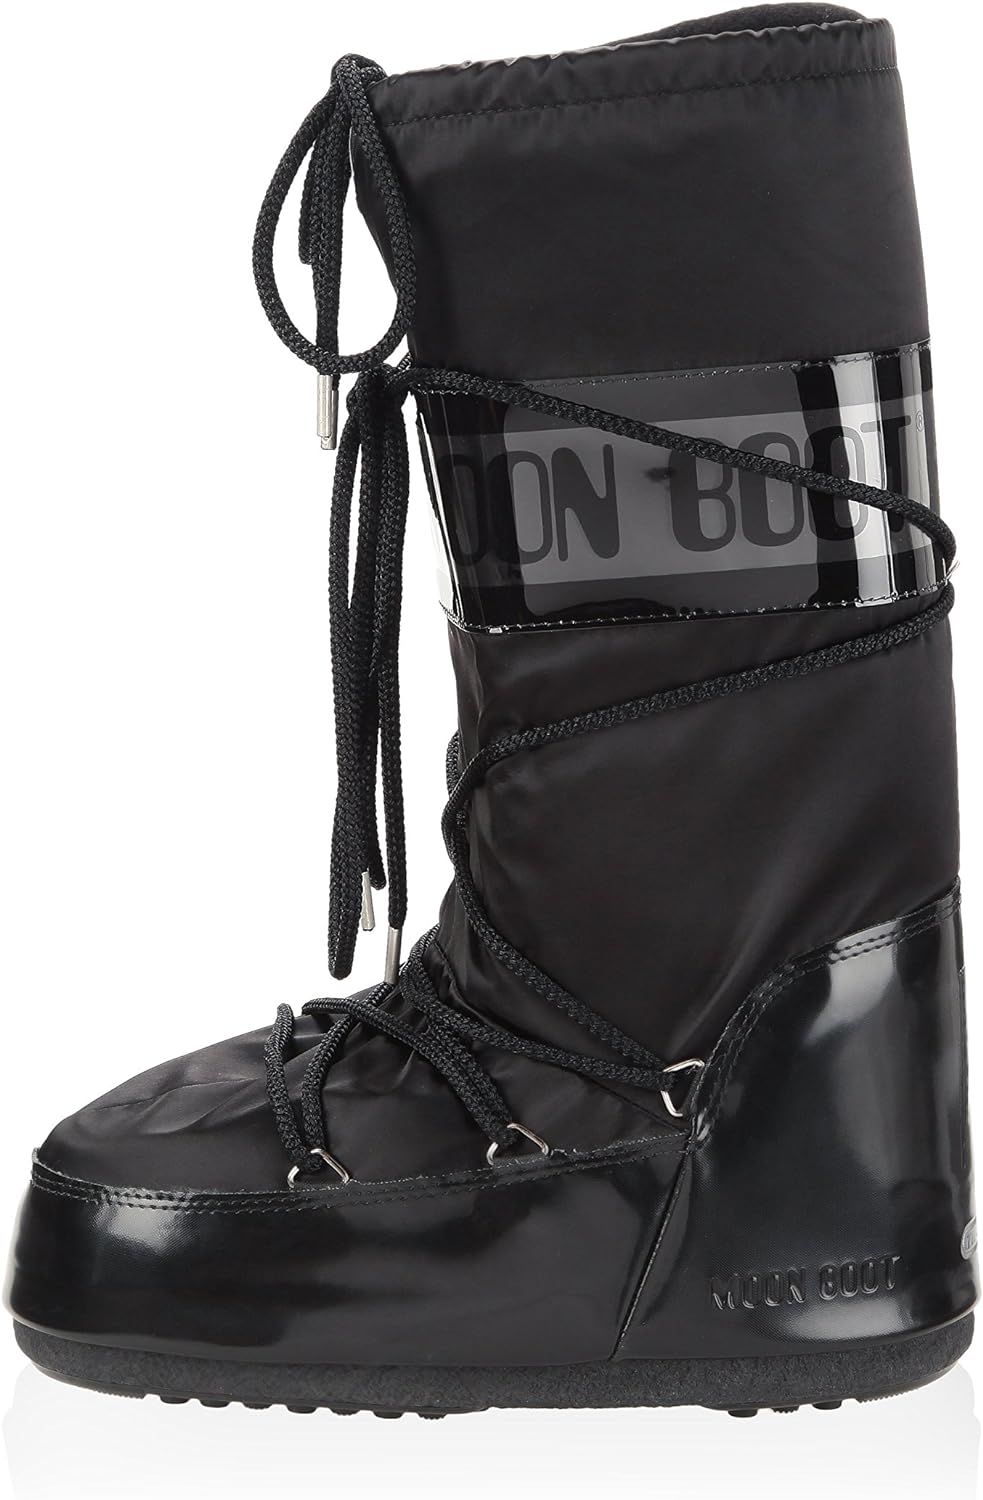 Unisex Adults Original Tecnica Moon Boot Glance Nylon Knee High Waterproof Boot | Amazon (US)